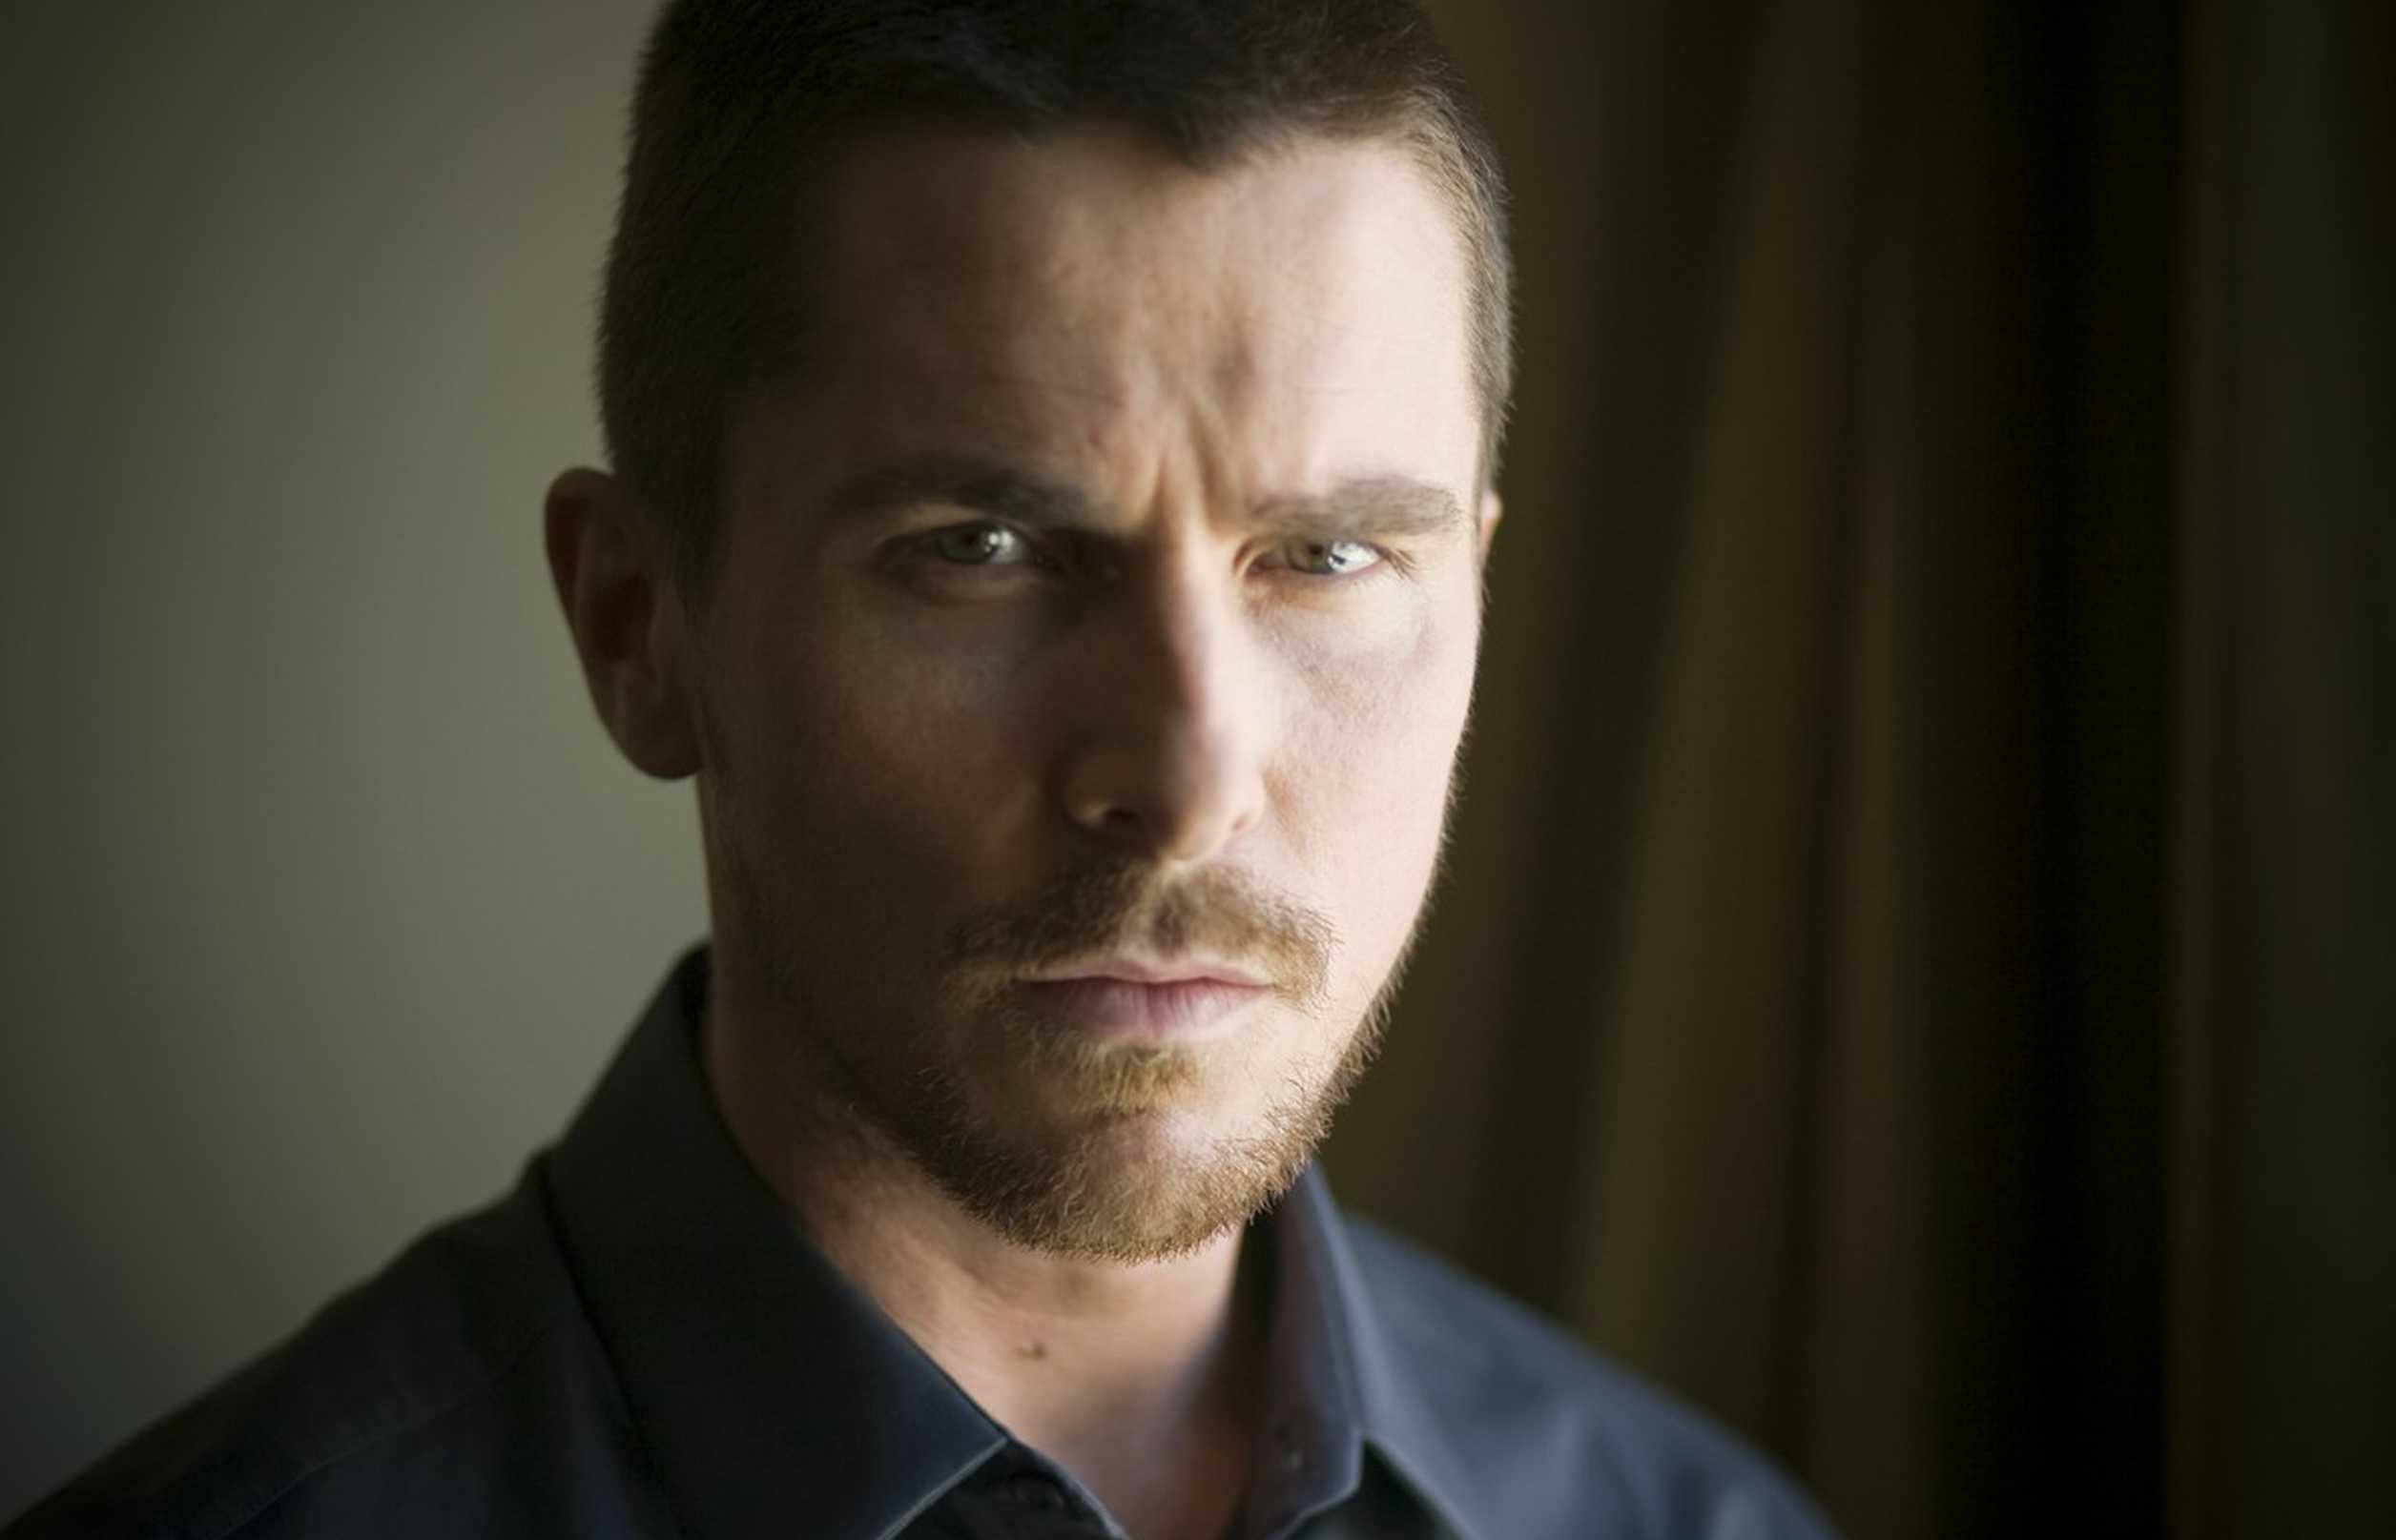 men, Christian Bale, faces - desktop wallpaper